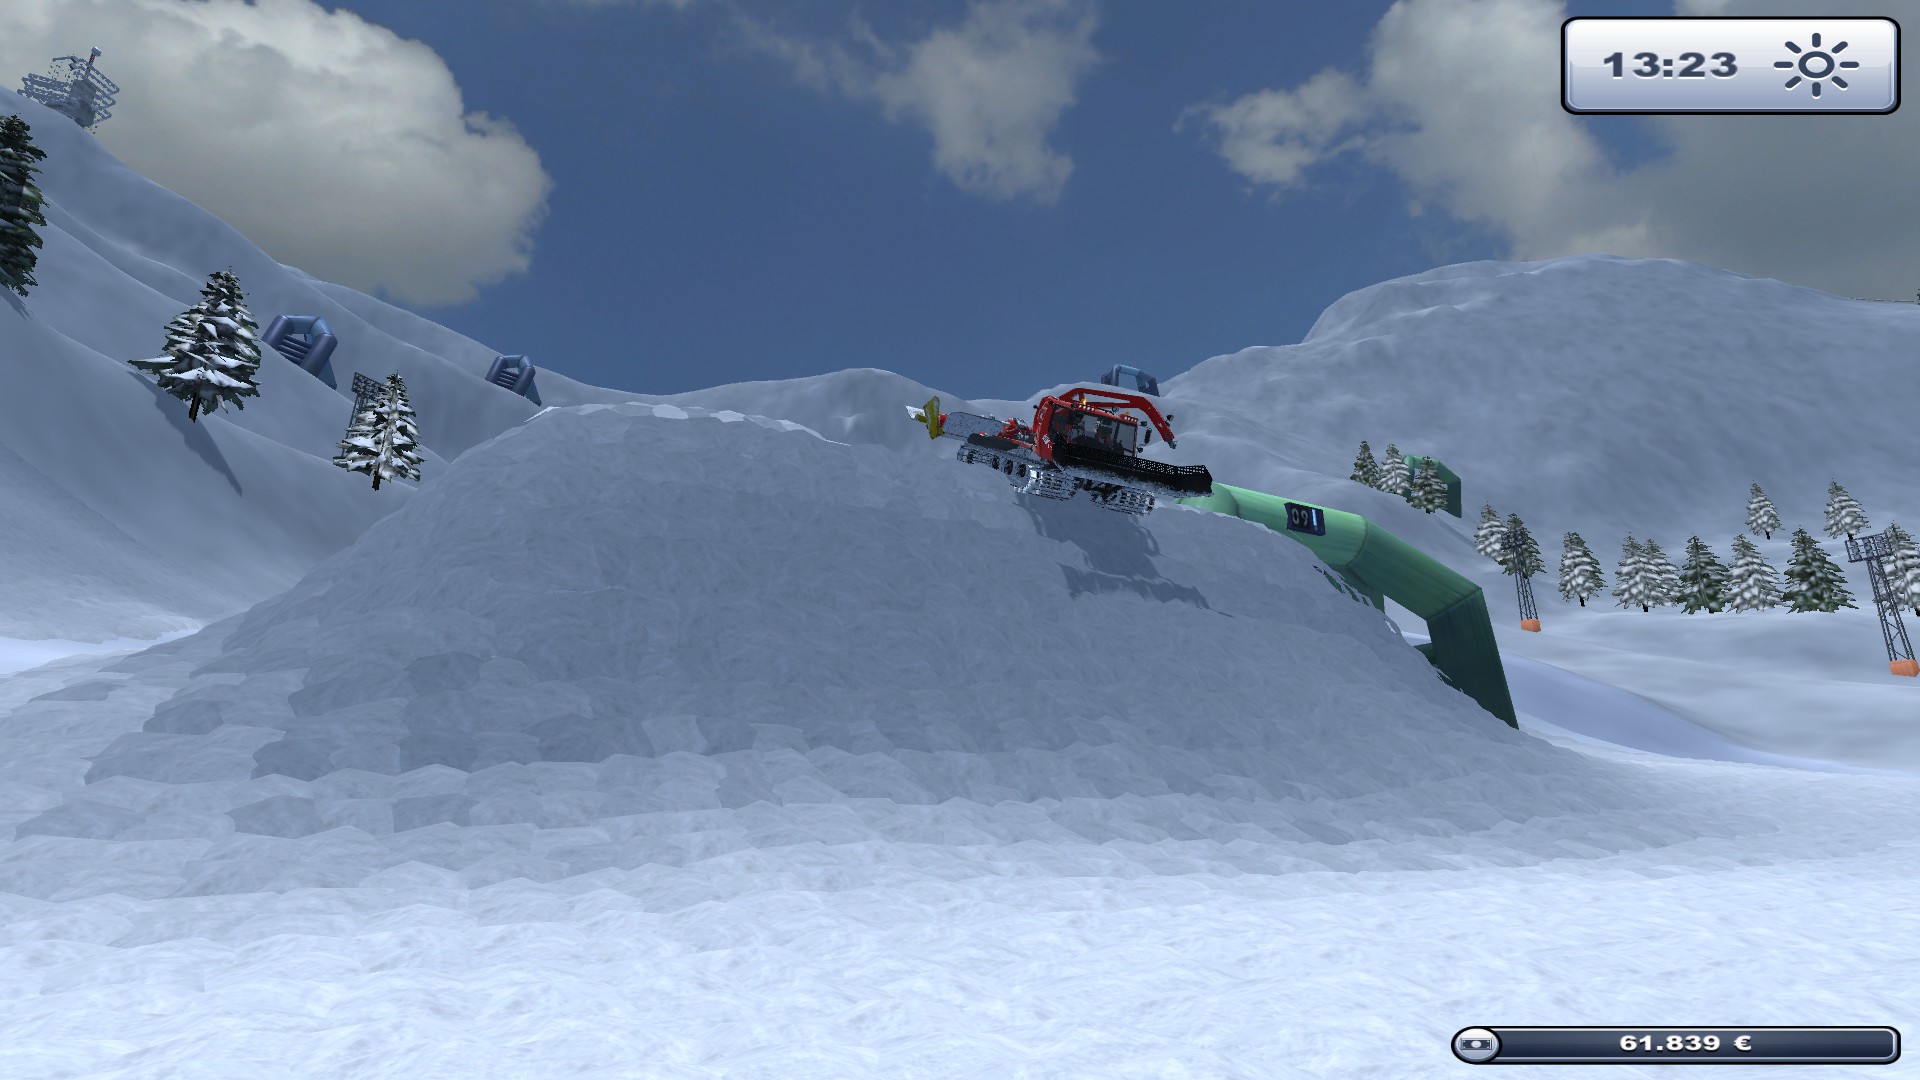 ski region simulator 2012 download full version free